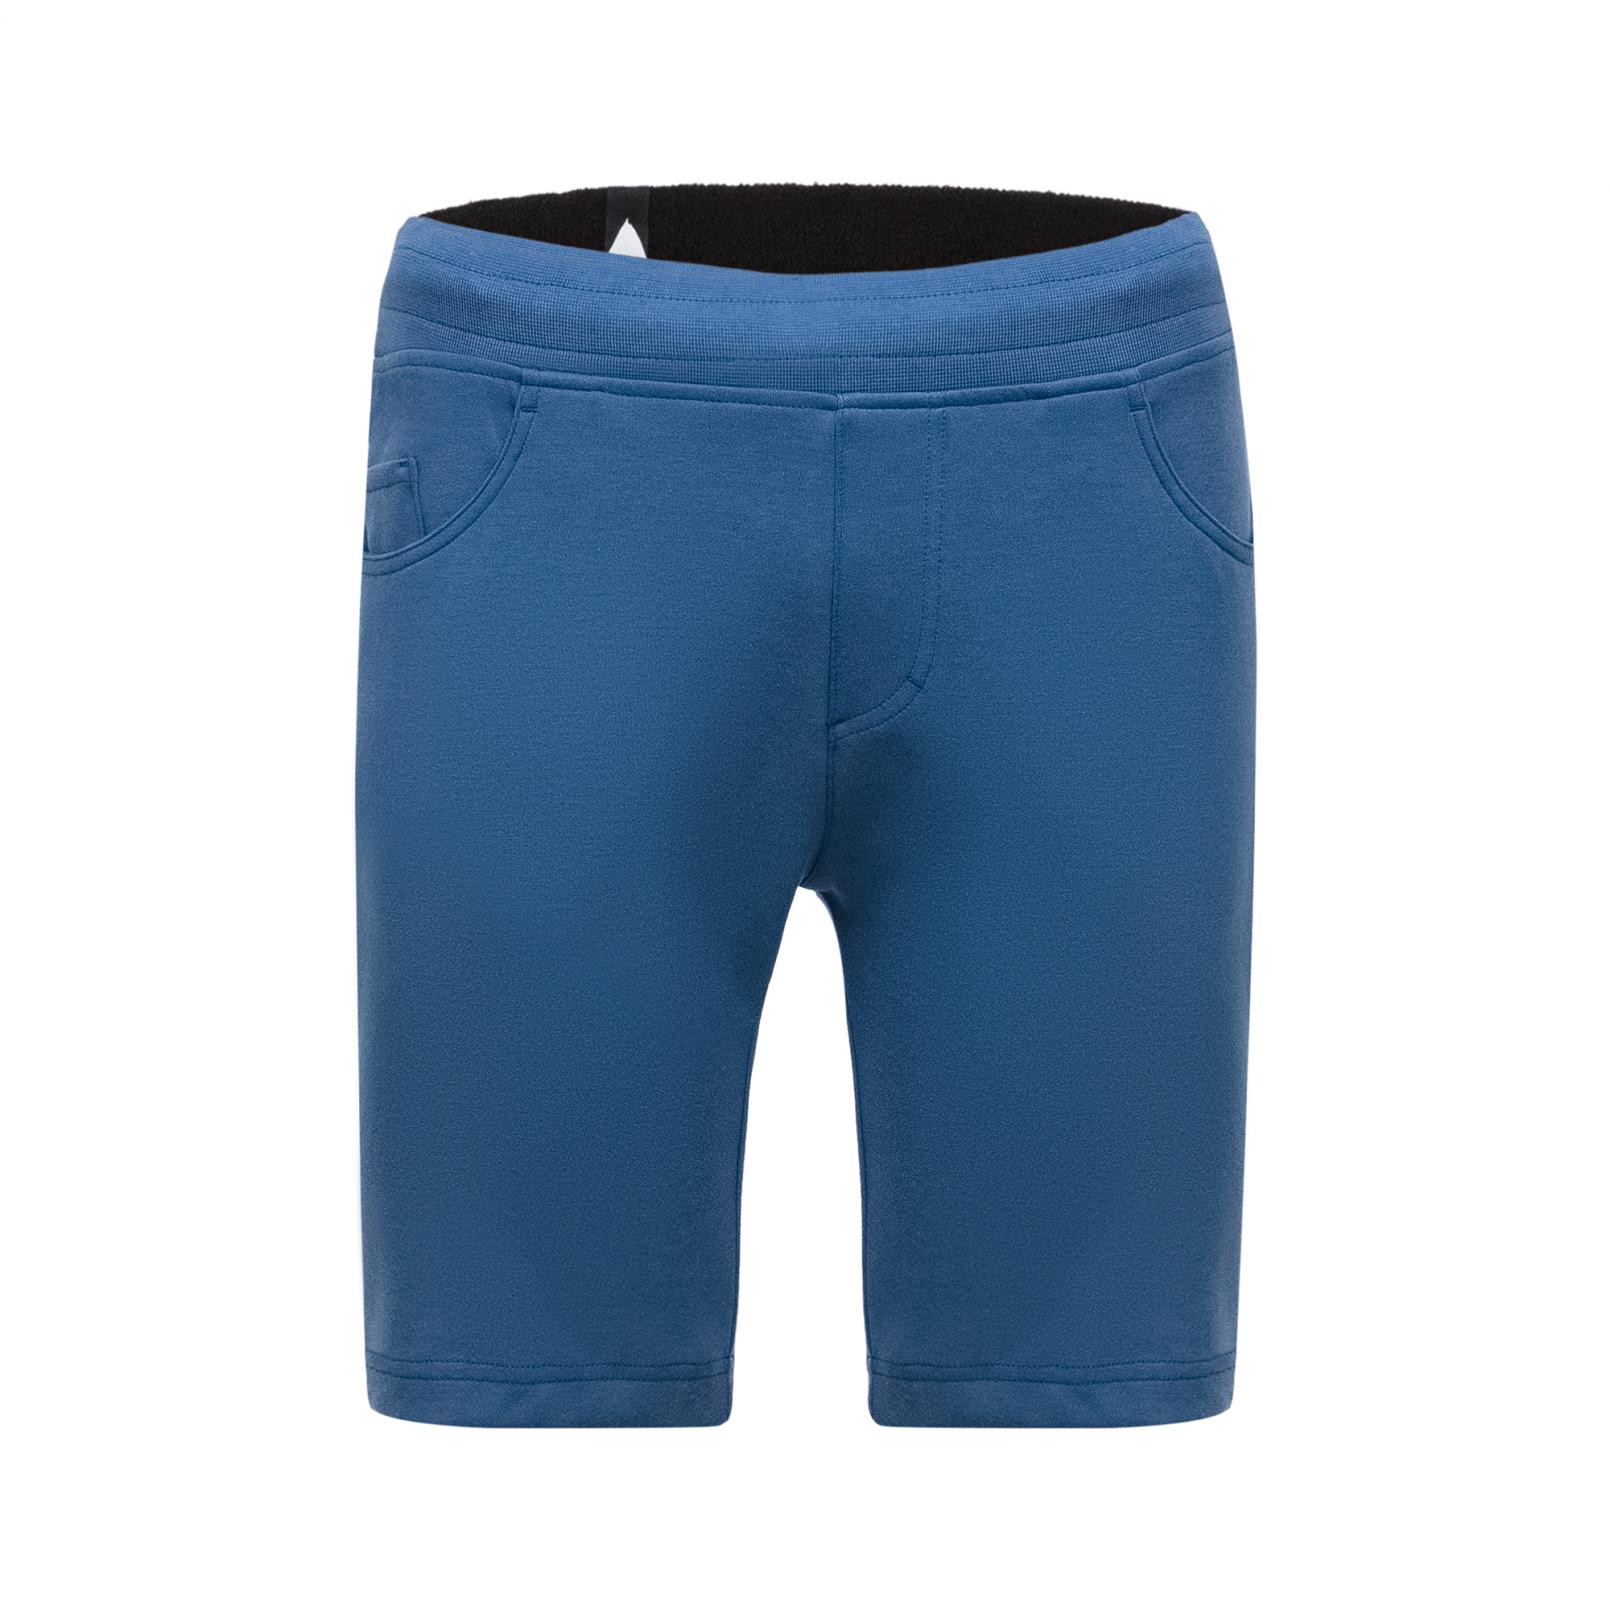 Shorts – Le Coq Sportif Essentiels Short Blue